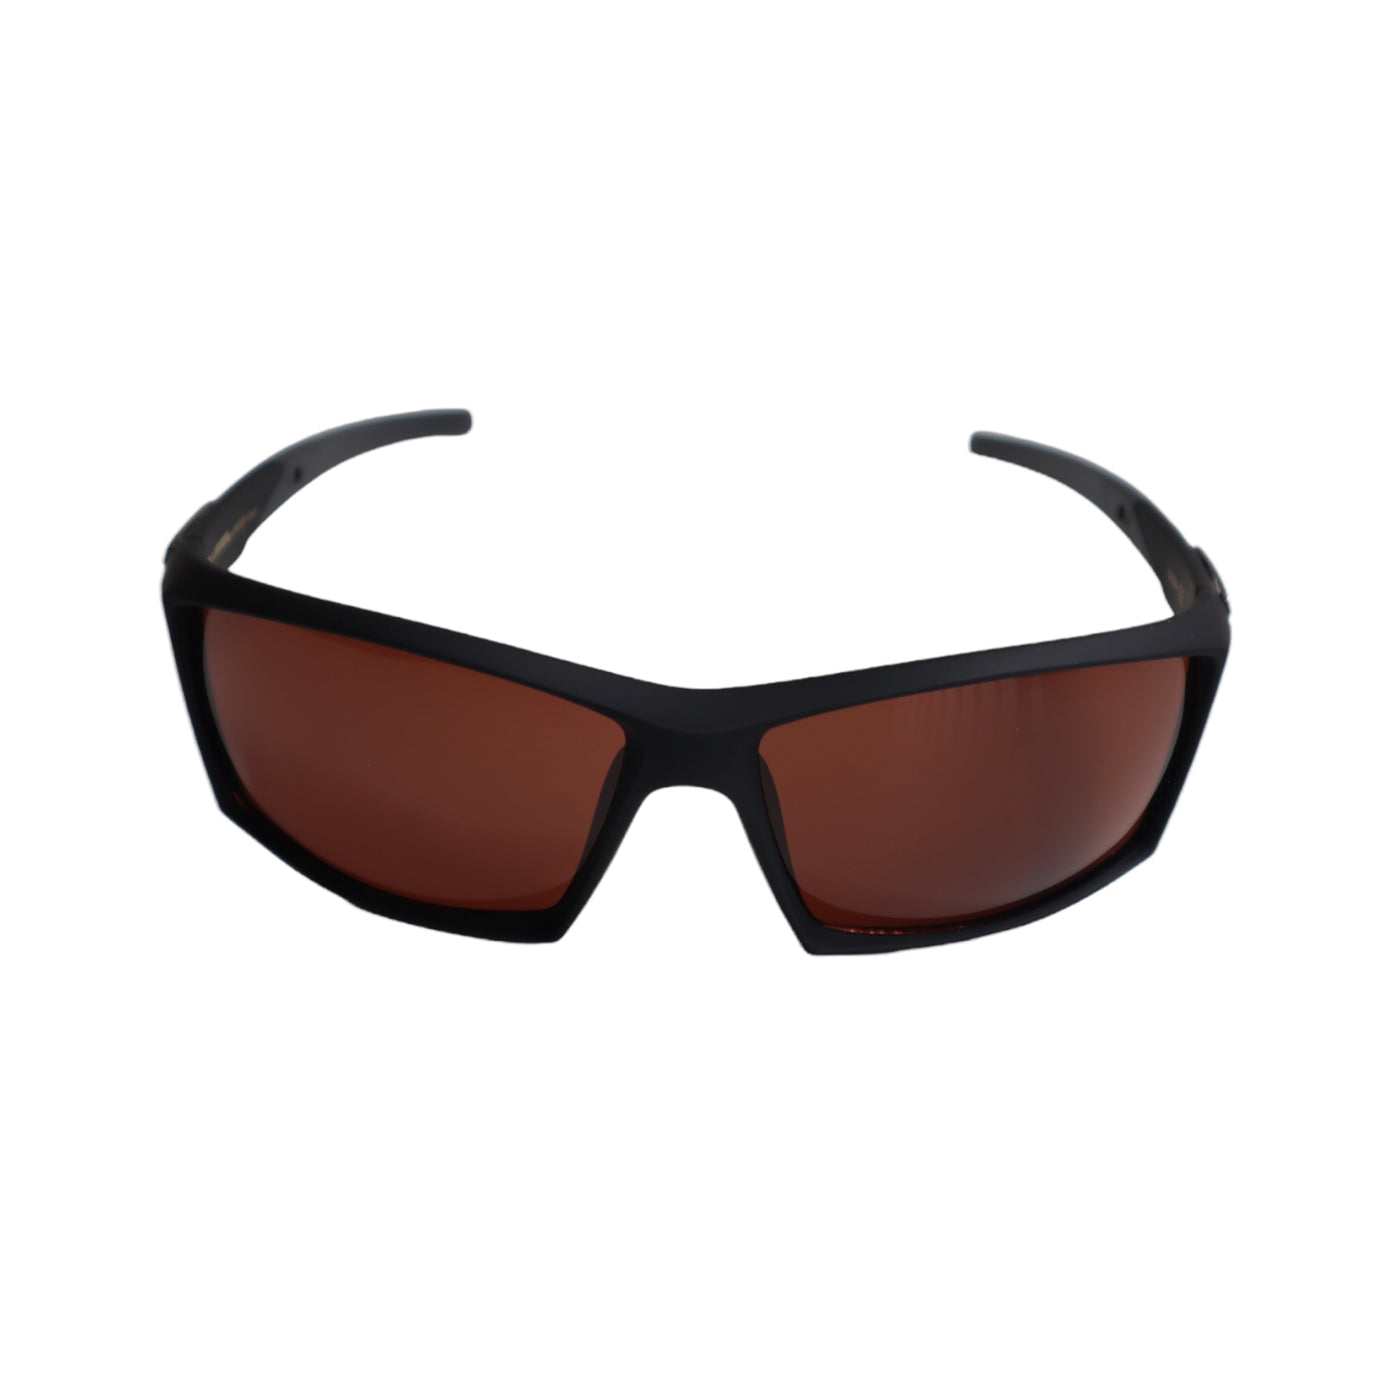 ROAD WARRIOR Anti-Glare Sunglasses BLACK Matte Frame High Definition Brown Lens